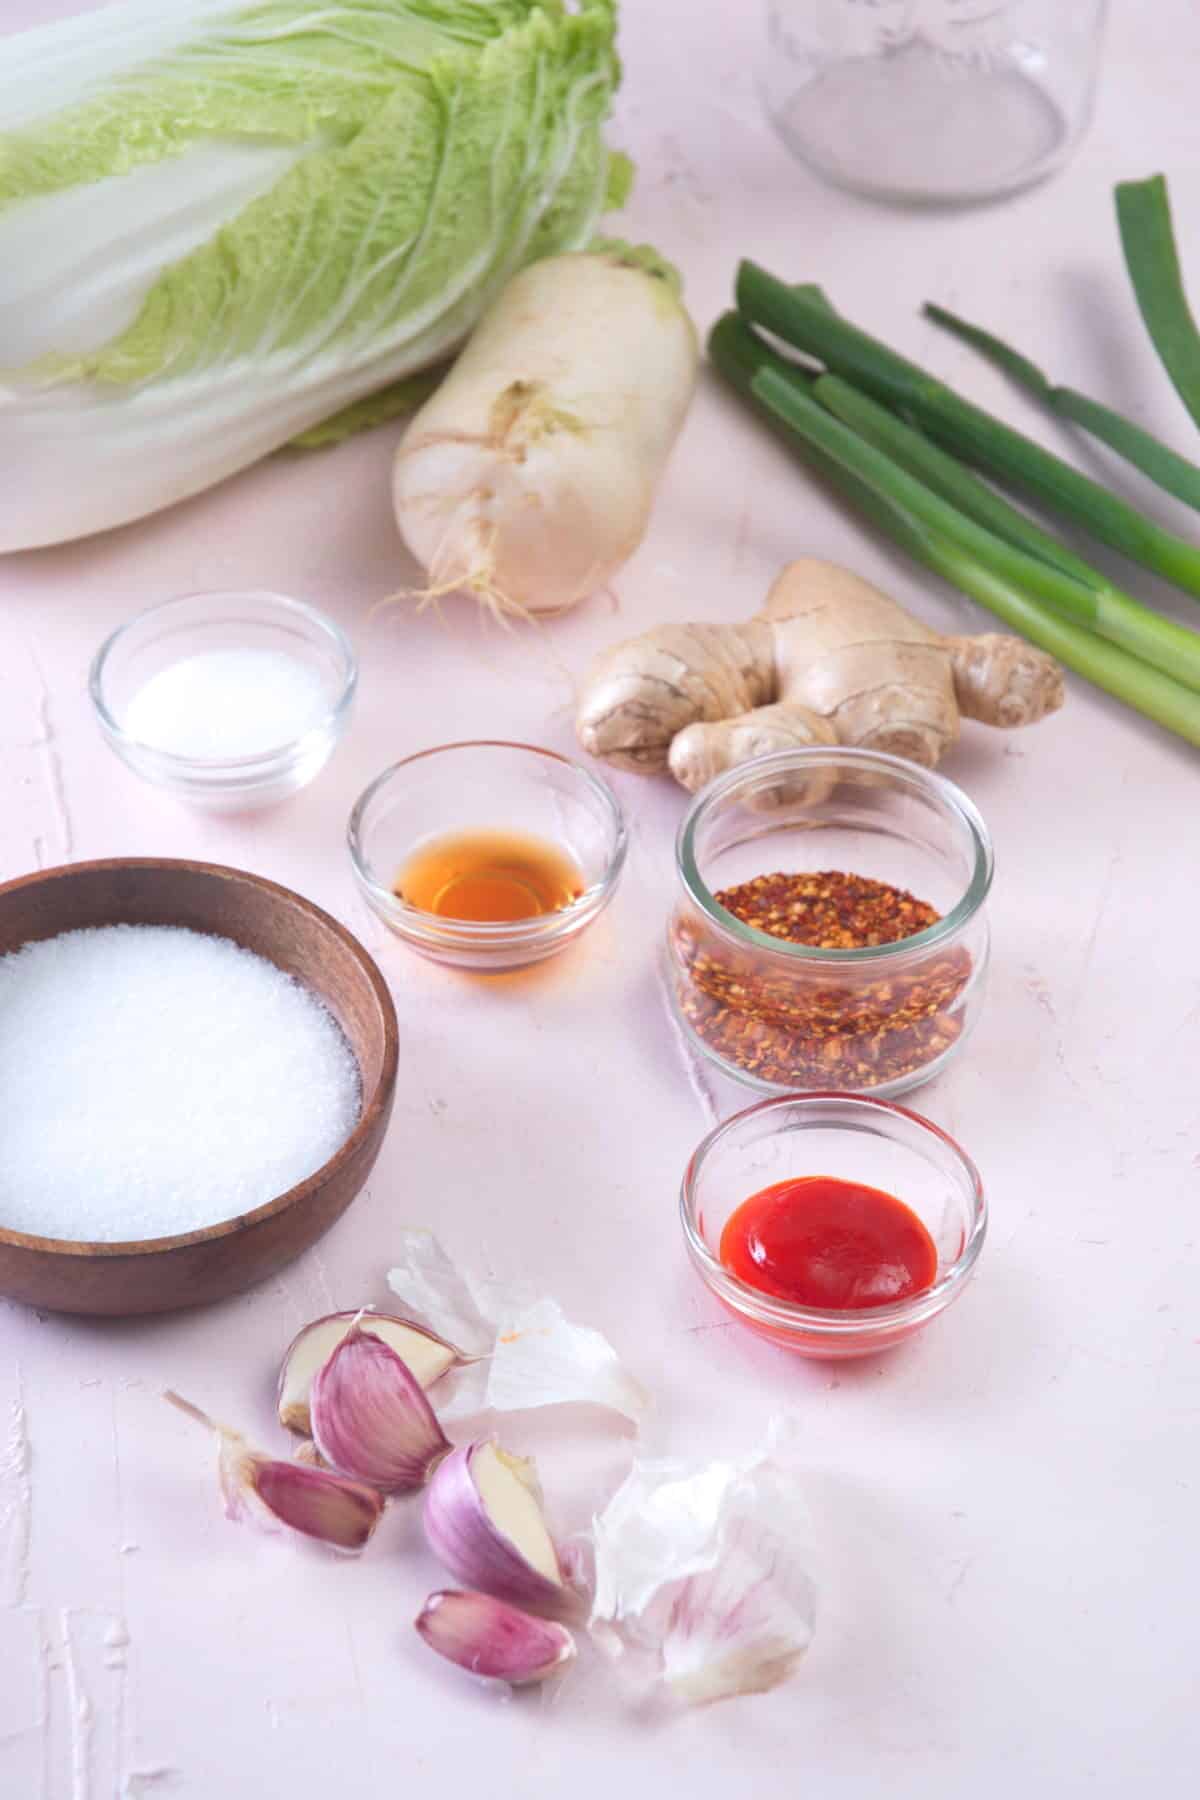 Kimchi ingredients prepped on white background.